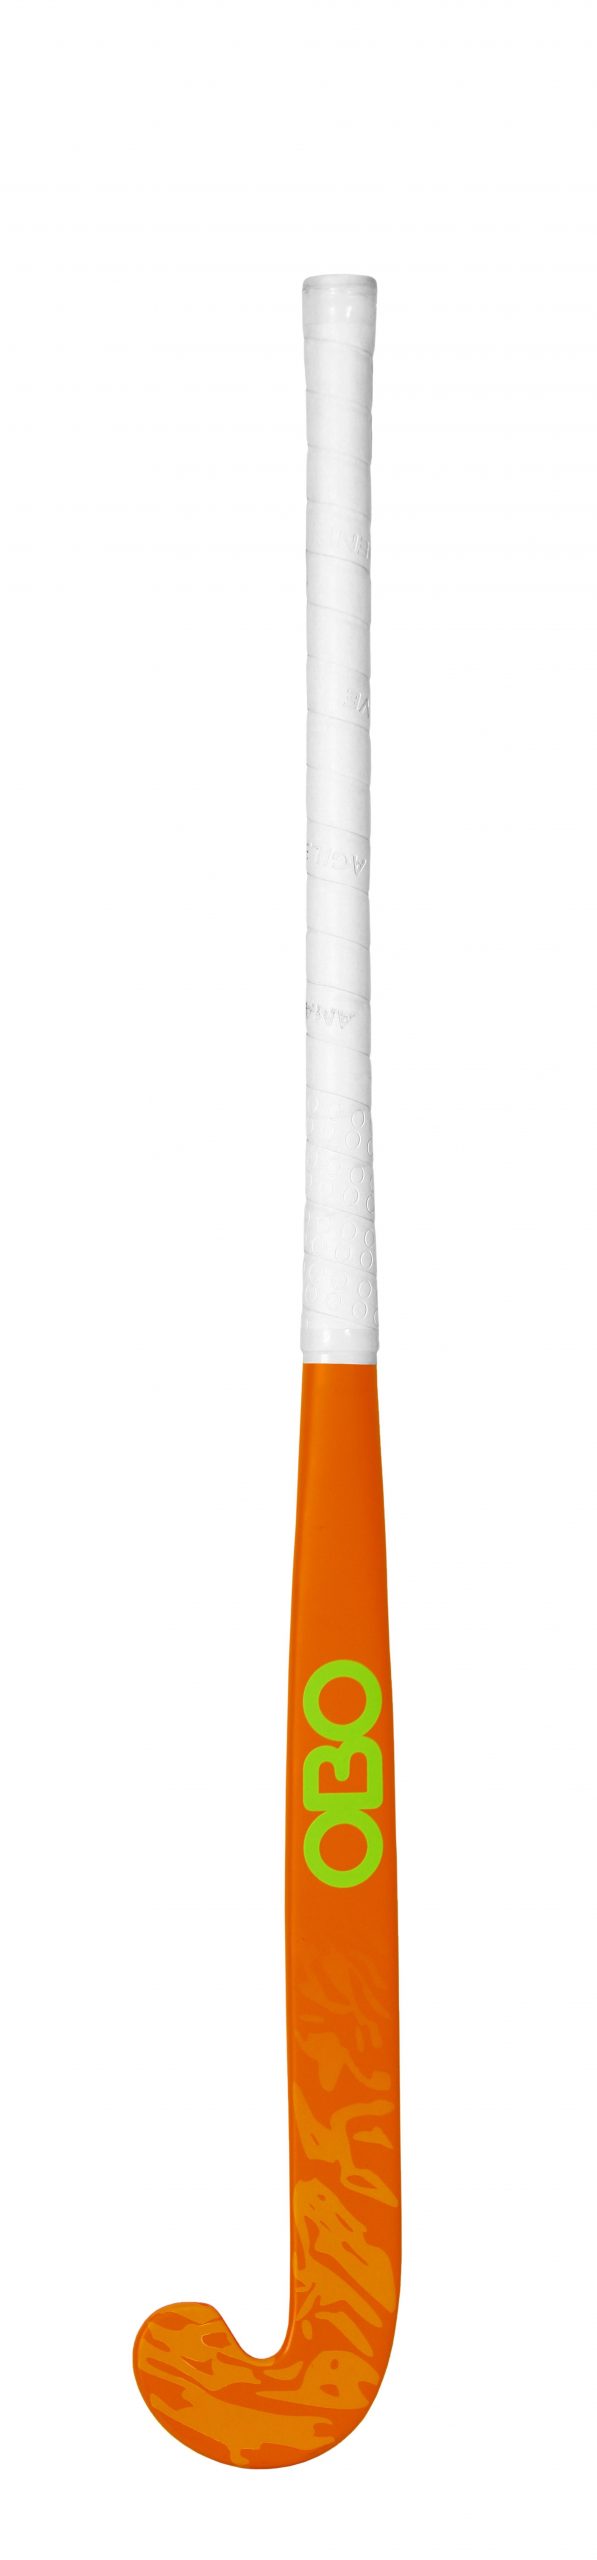 obo-cloud-stick-straight-as-torwartschlaeger-orange-total-right